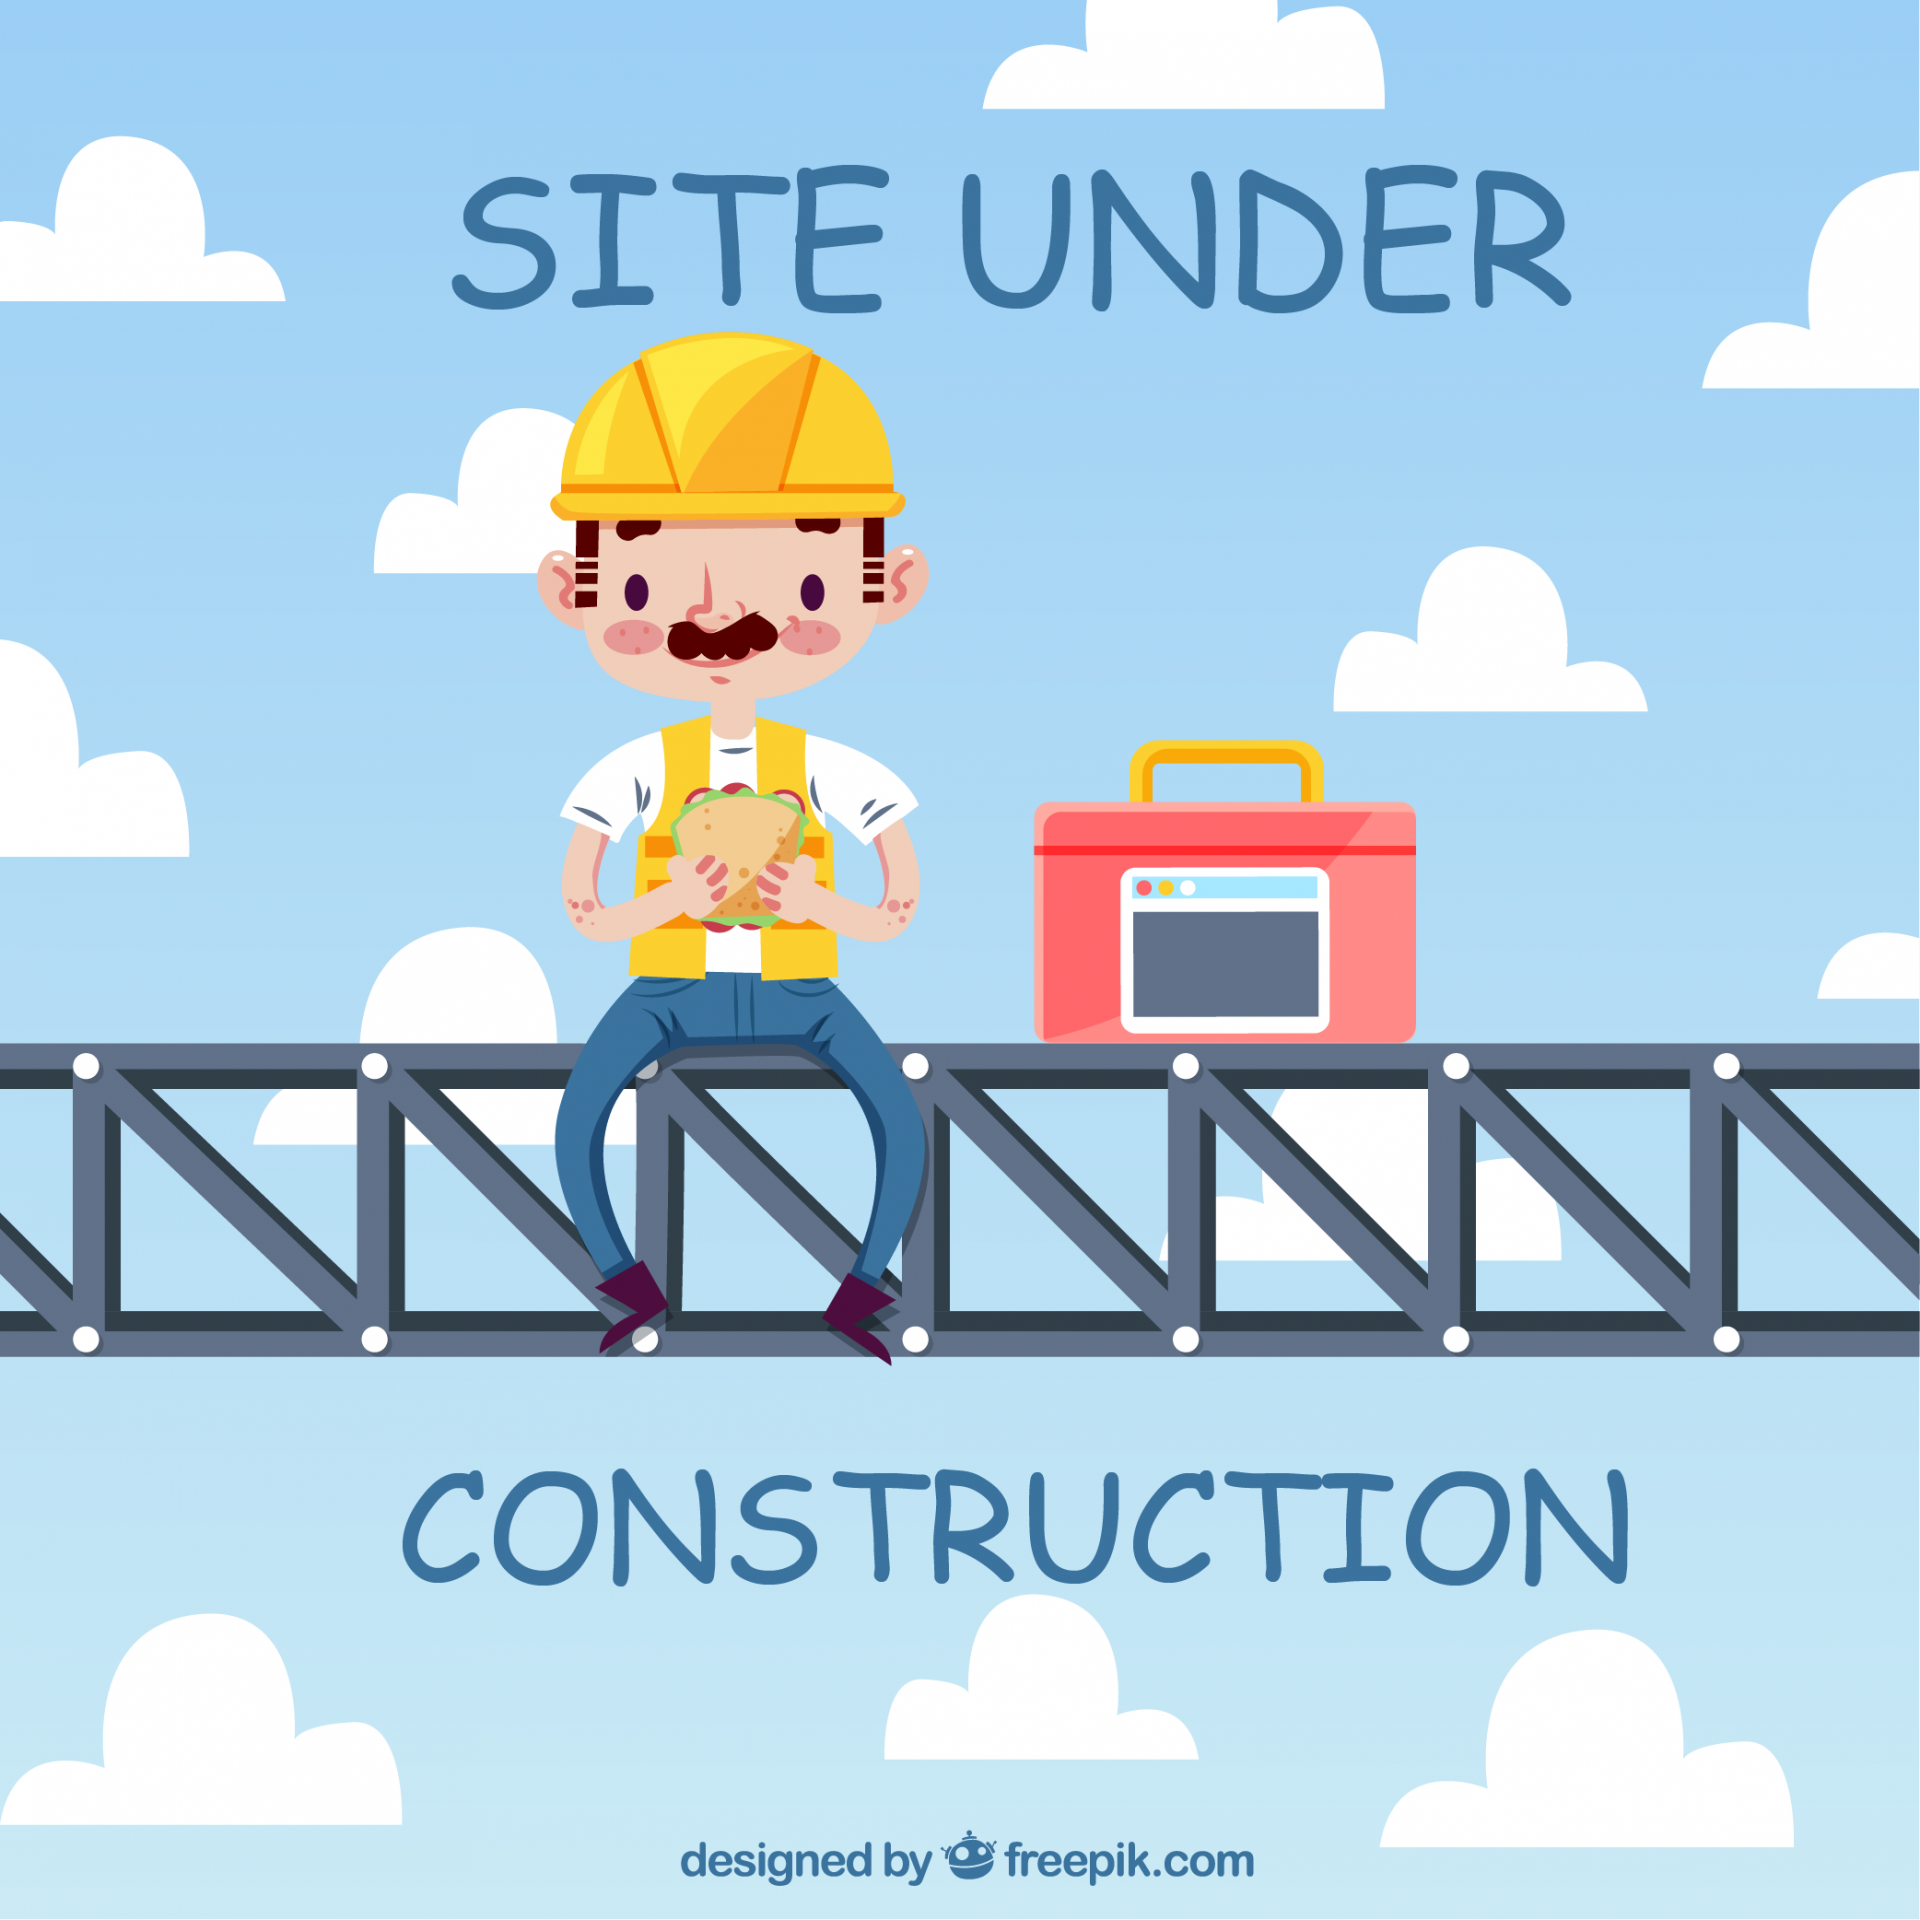 Site under construction